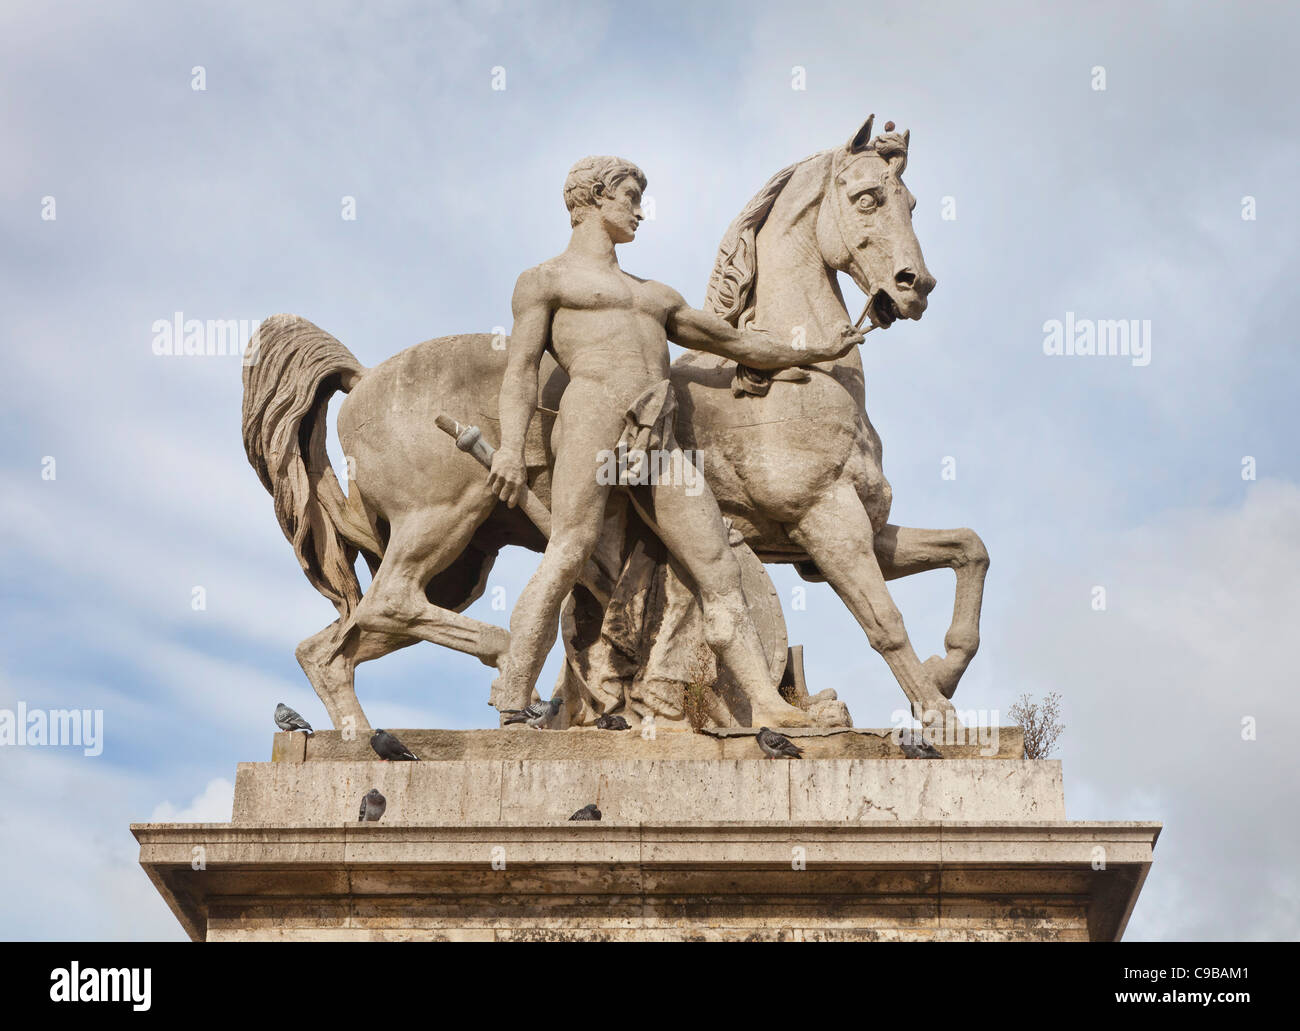 Pont d'lena bridge, Parigi, Francia, statua di un guerriero con cavallo Foto Stock